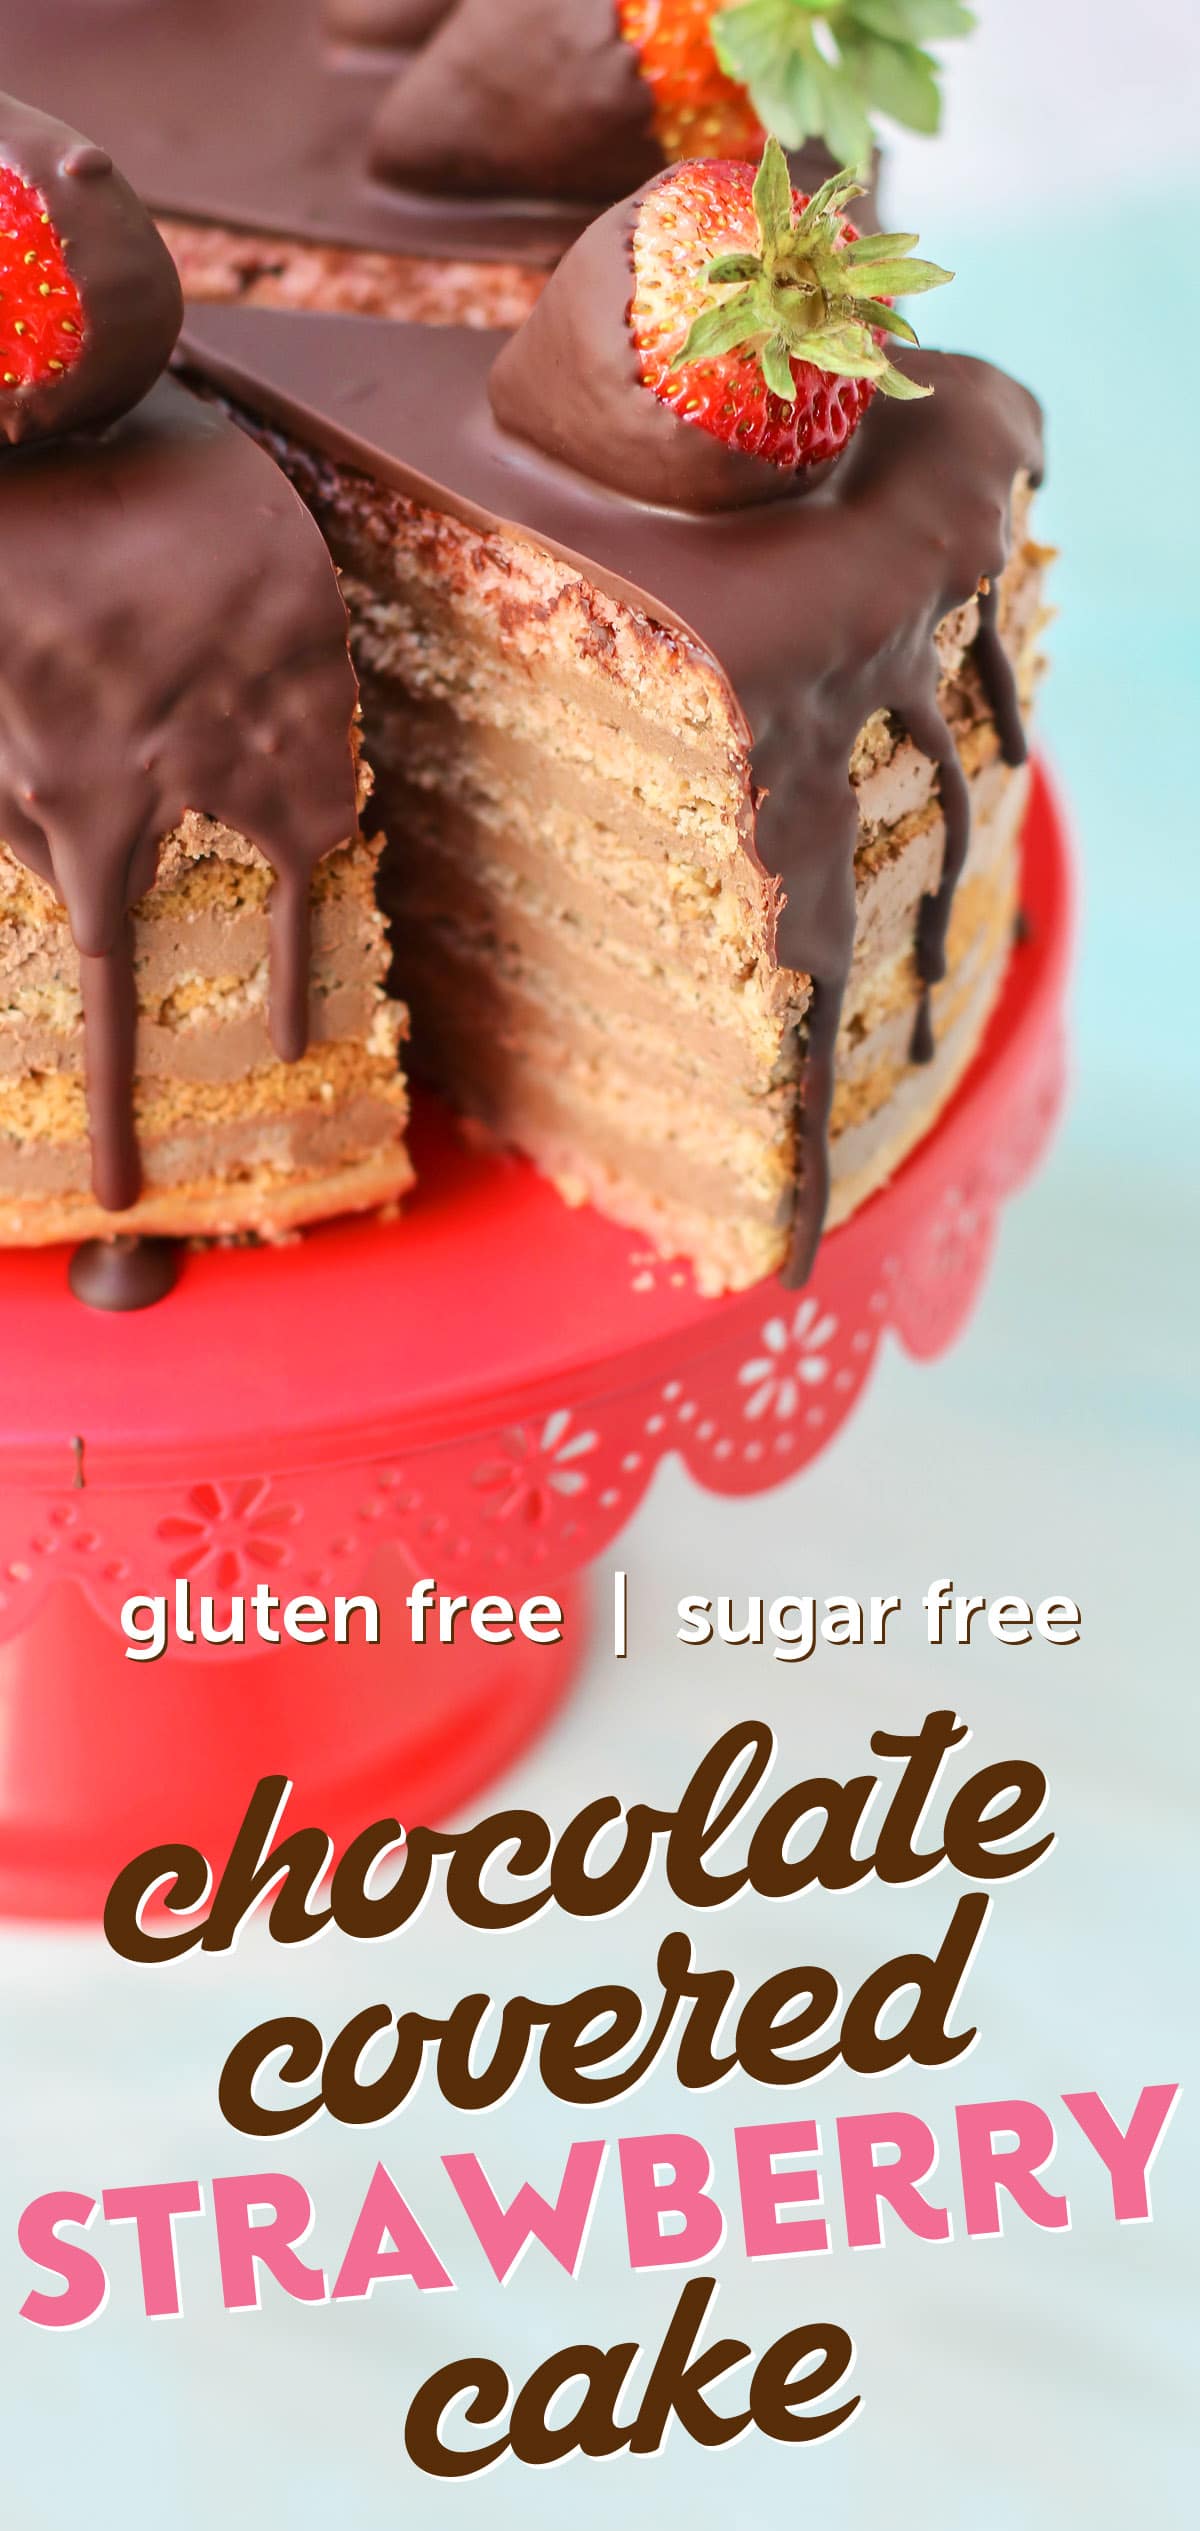 Seven-Layer Chocolate-Covered Strawberry Cake (sugar free, gluten free)